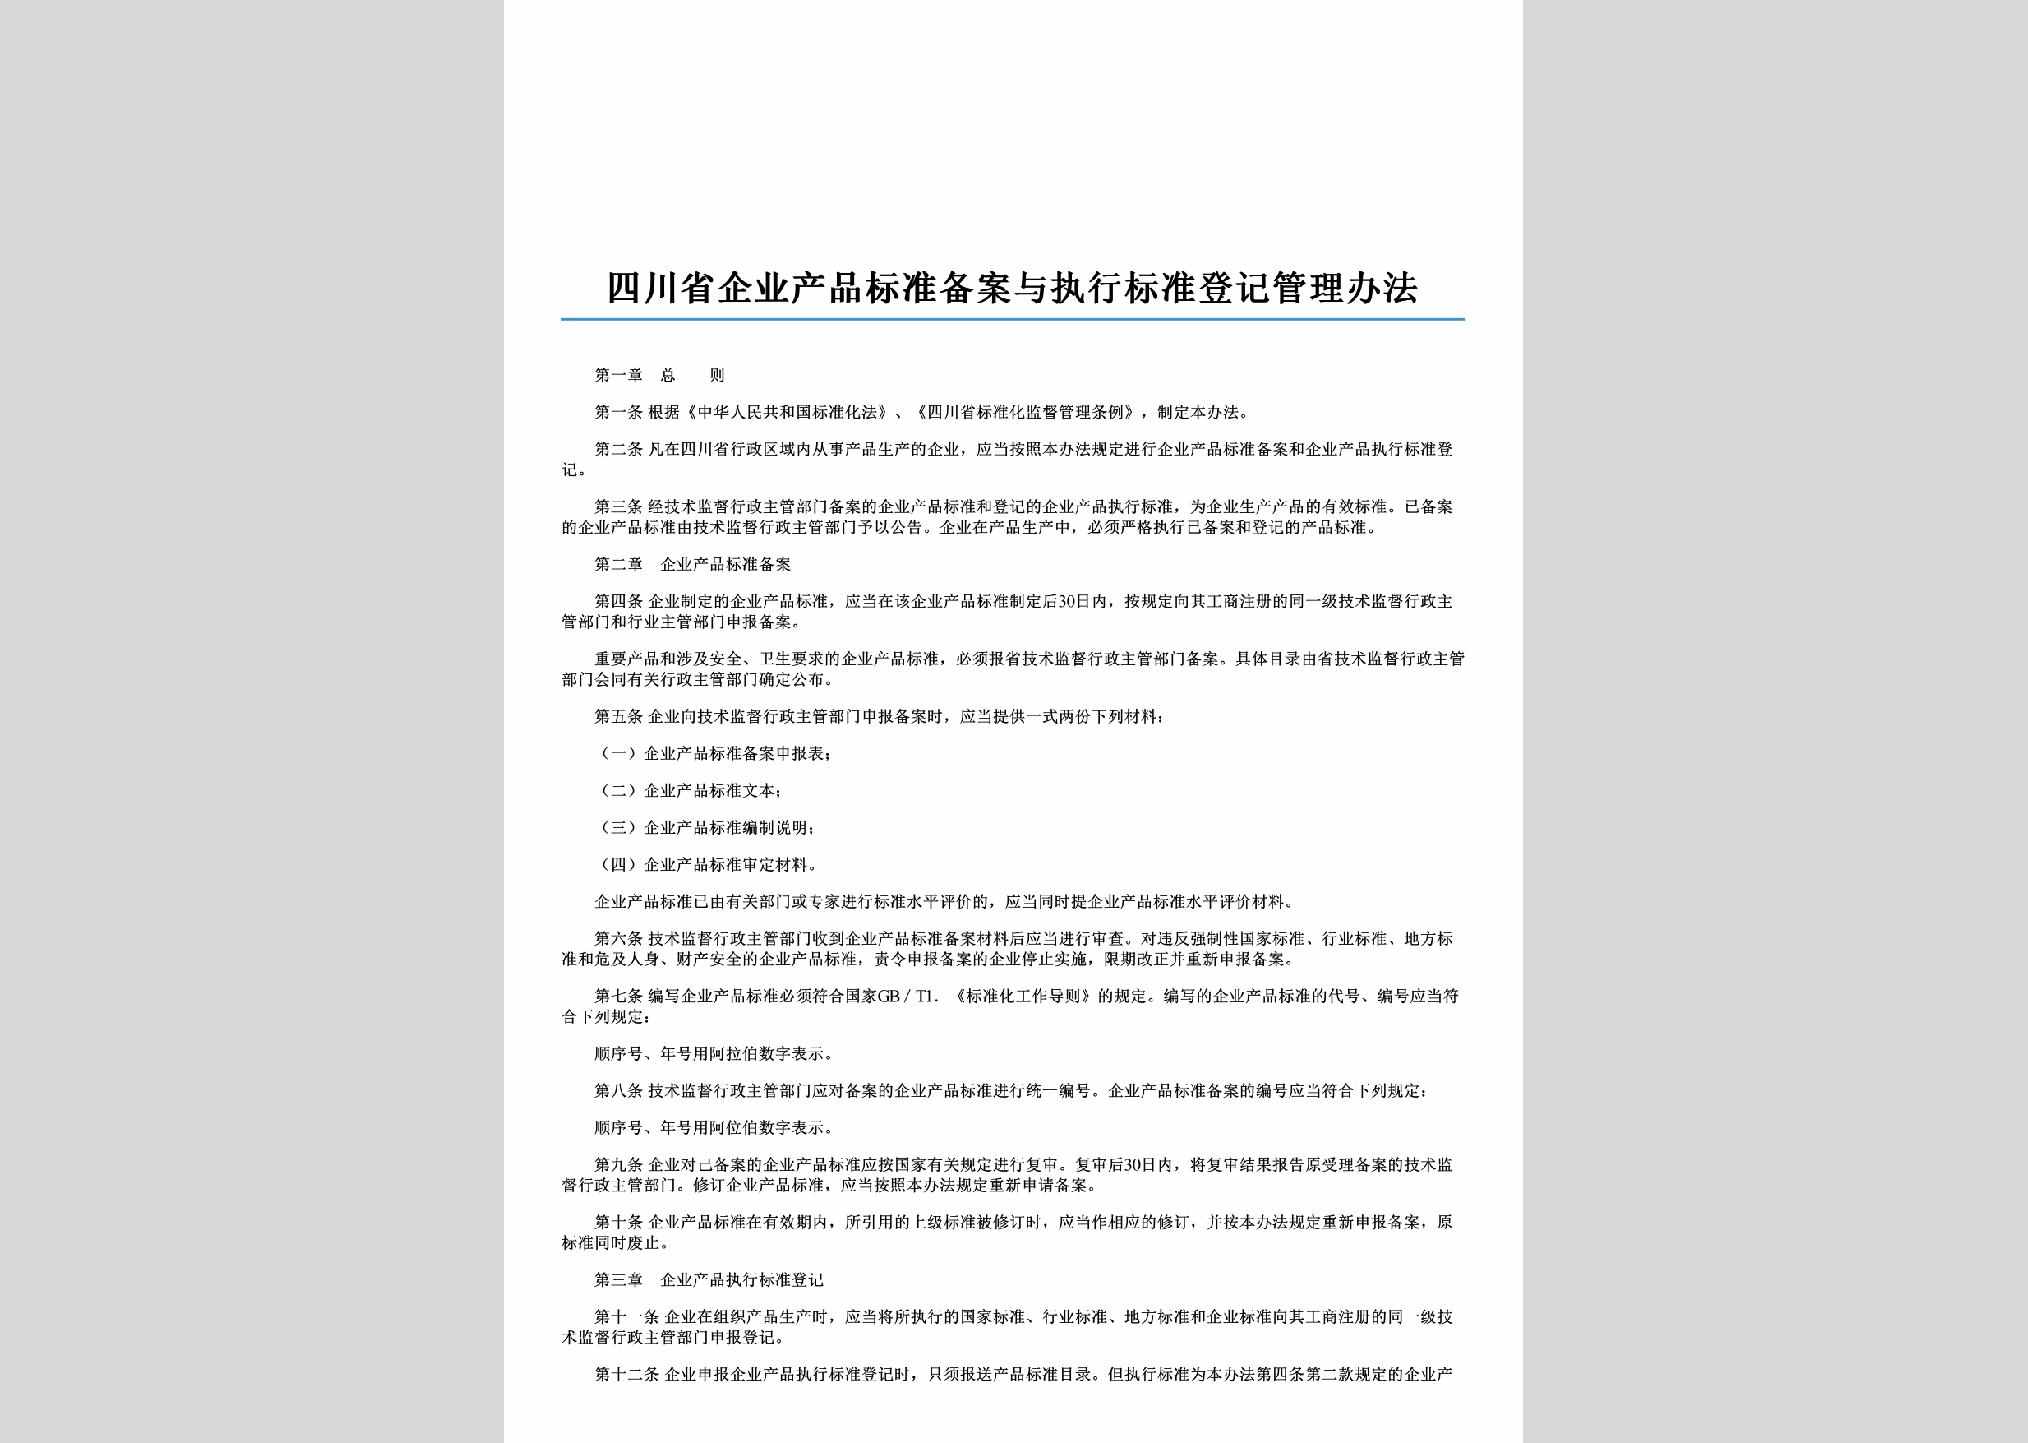 SC-QYCPGLBF-2006：四川省企业产品标准备案与执行标准登记管理办法